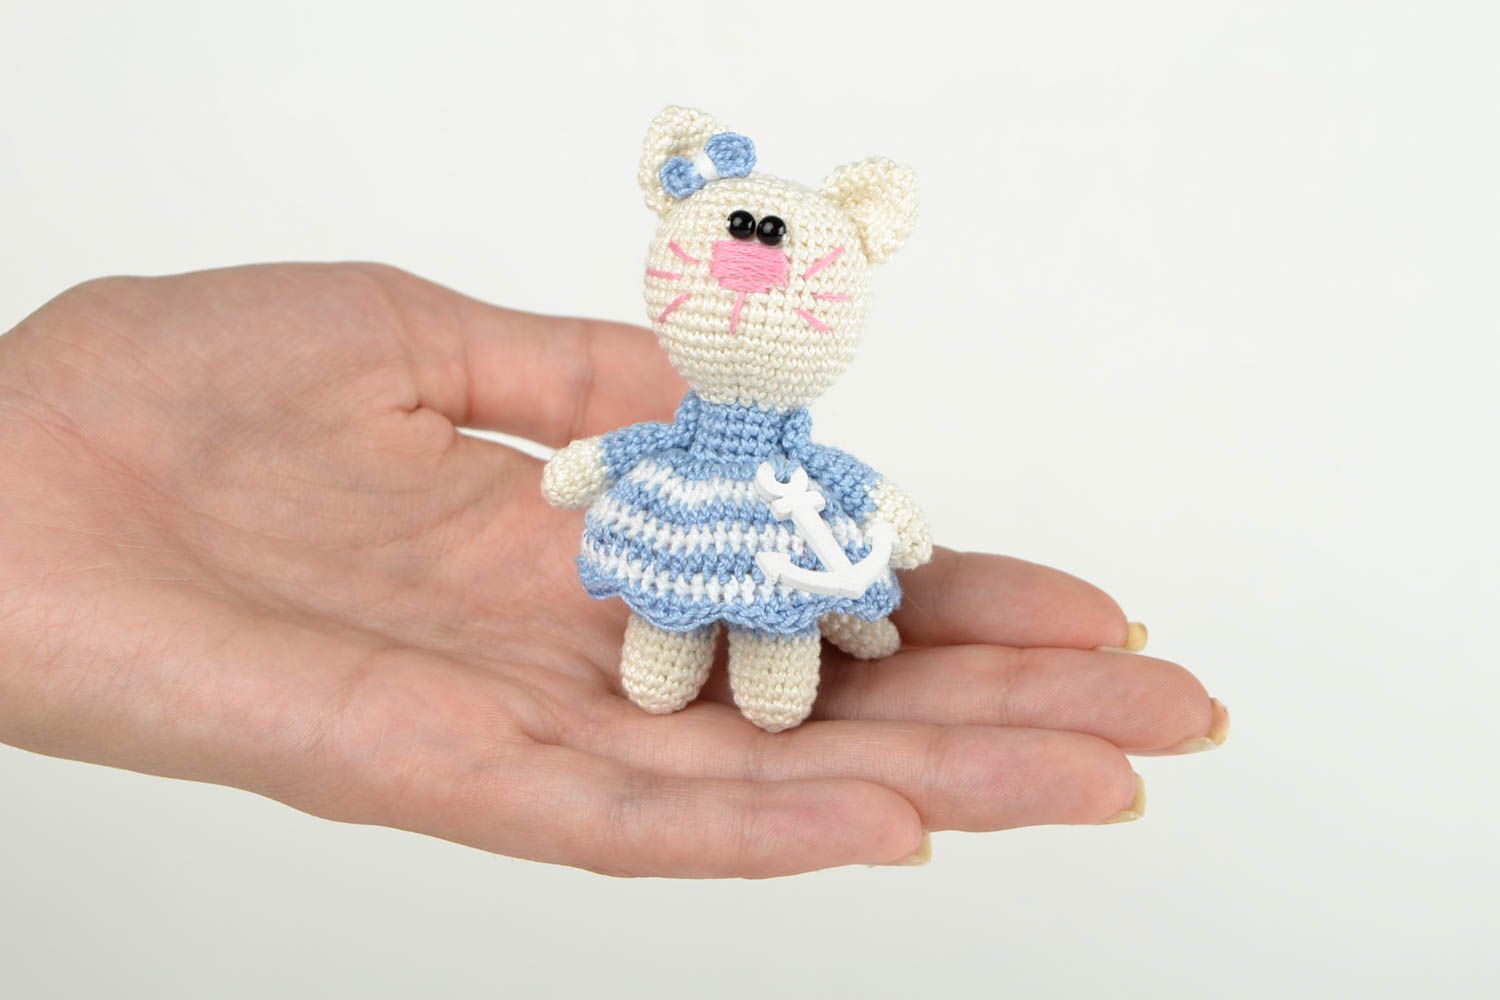 Handmade designer crocheted toy unusual cute soft toy stylish accessory photo 2